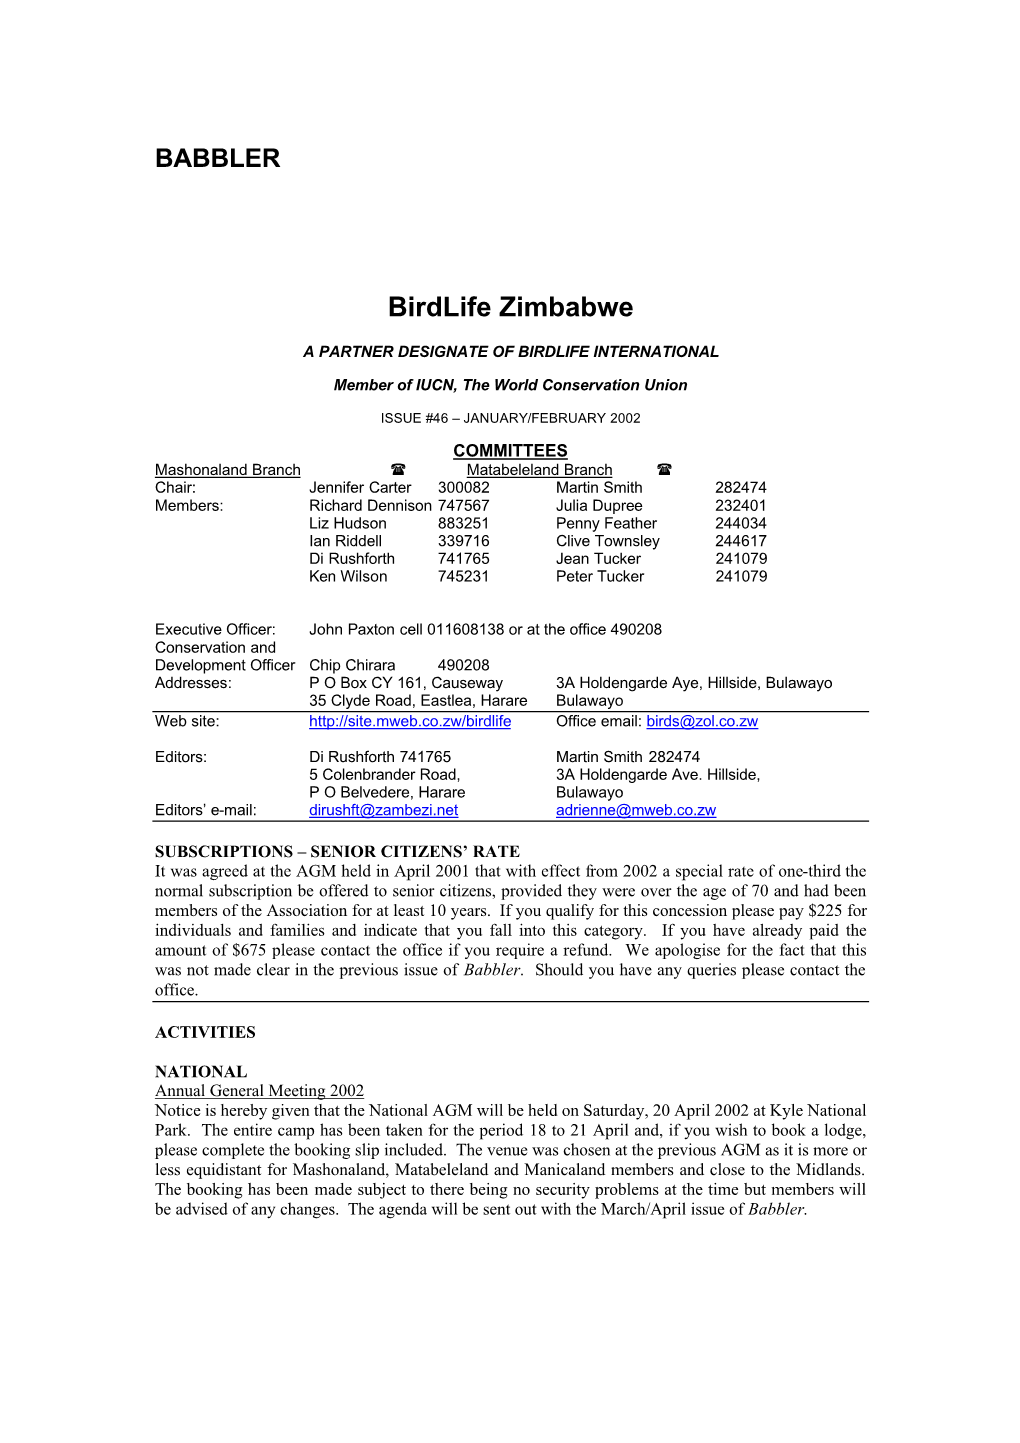 BABBLER Birdlife Zimbabwe